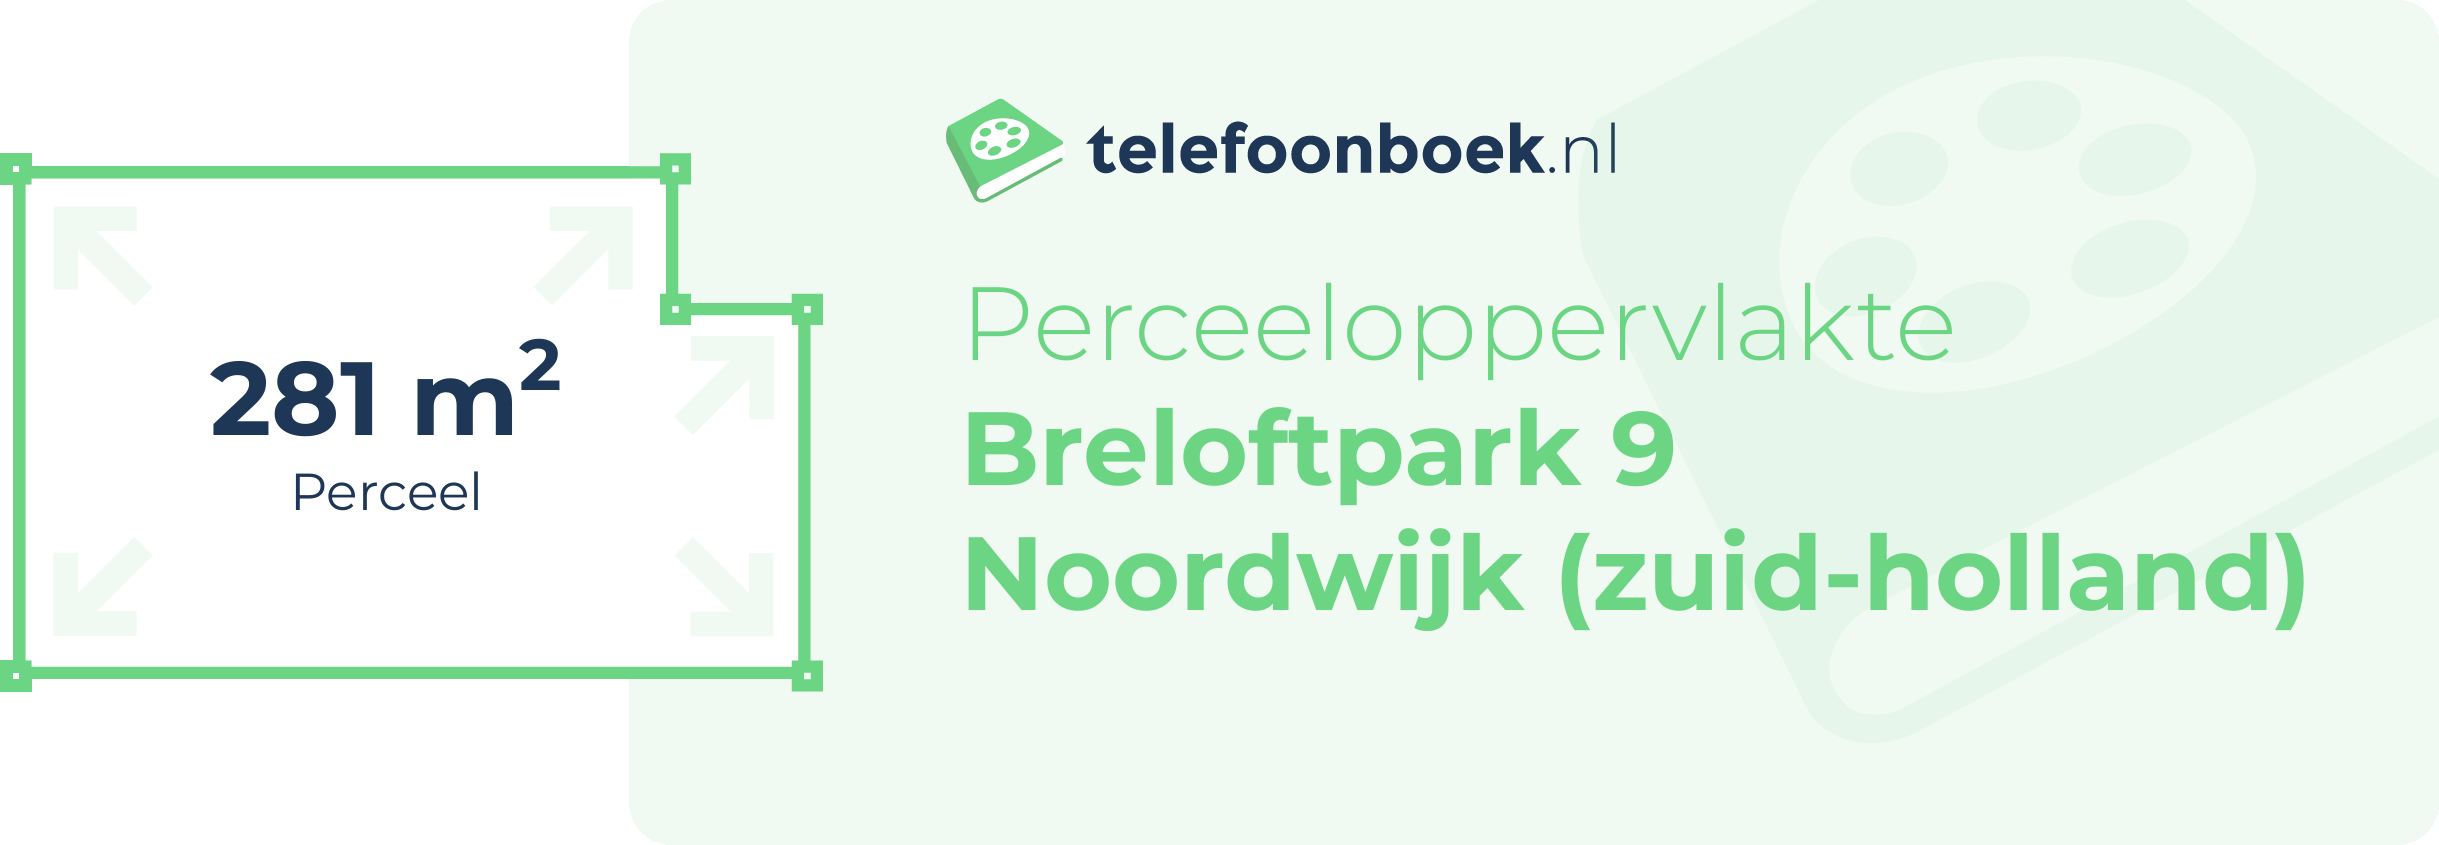 Perceeloppervlakte Breloftpark 9 Noordwijk (Zuid-Holland)